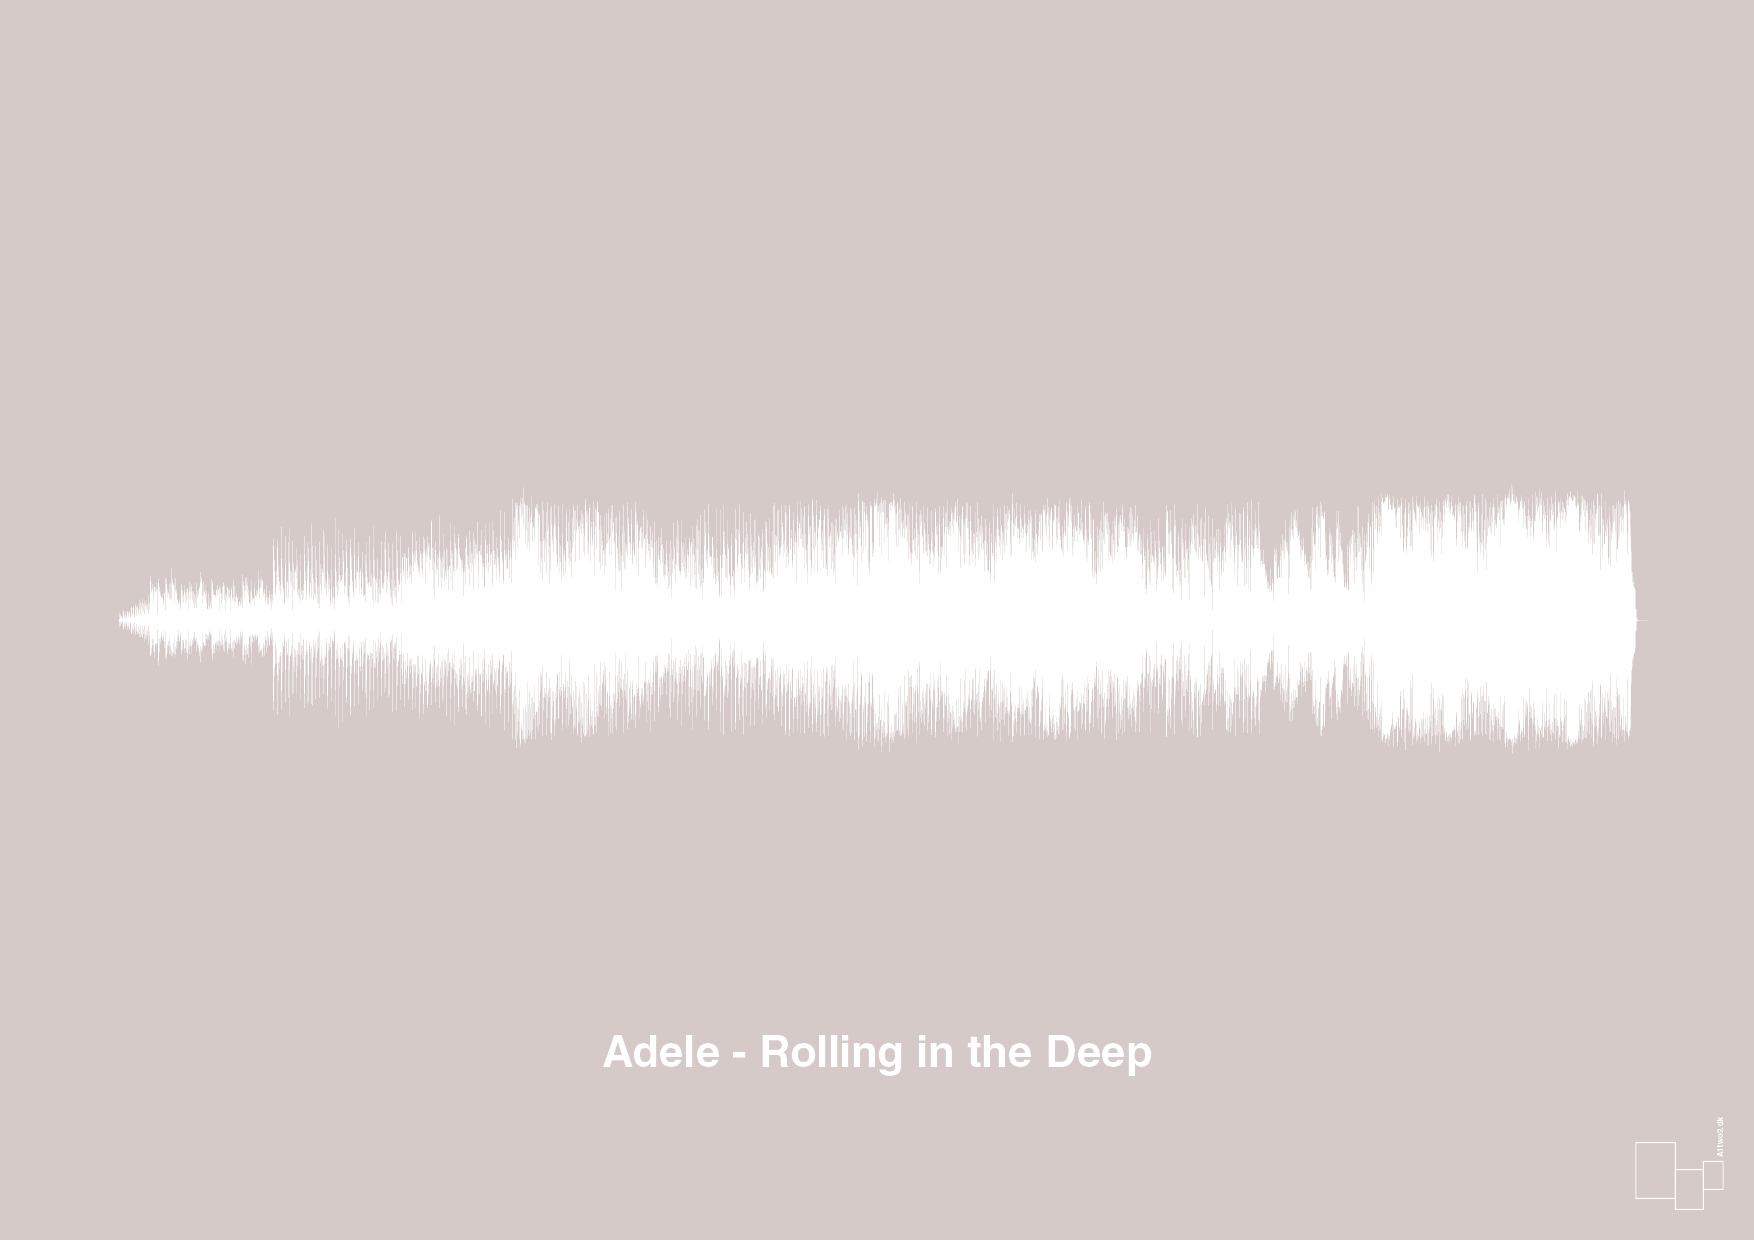 adele - rolling in the deep - Plakat med Musik i Broken Beige